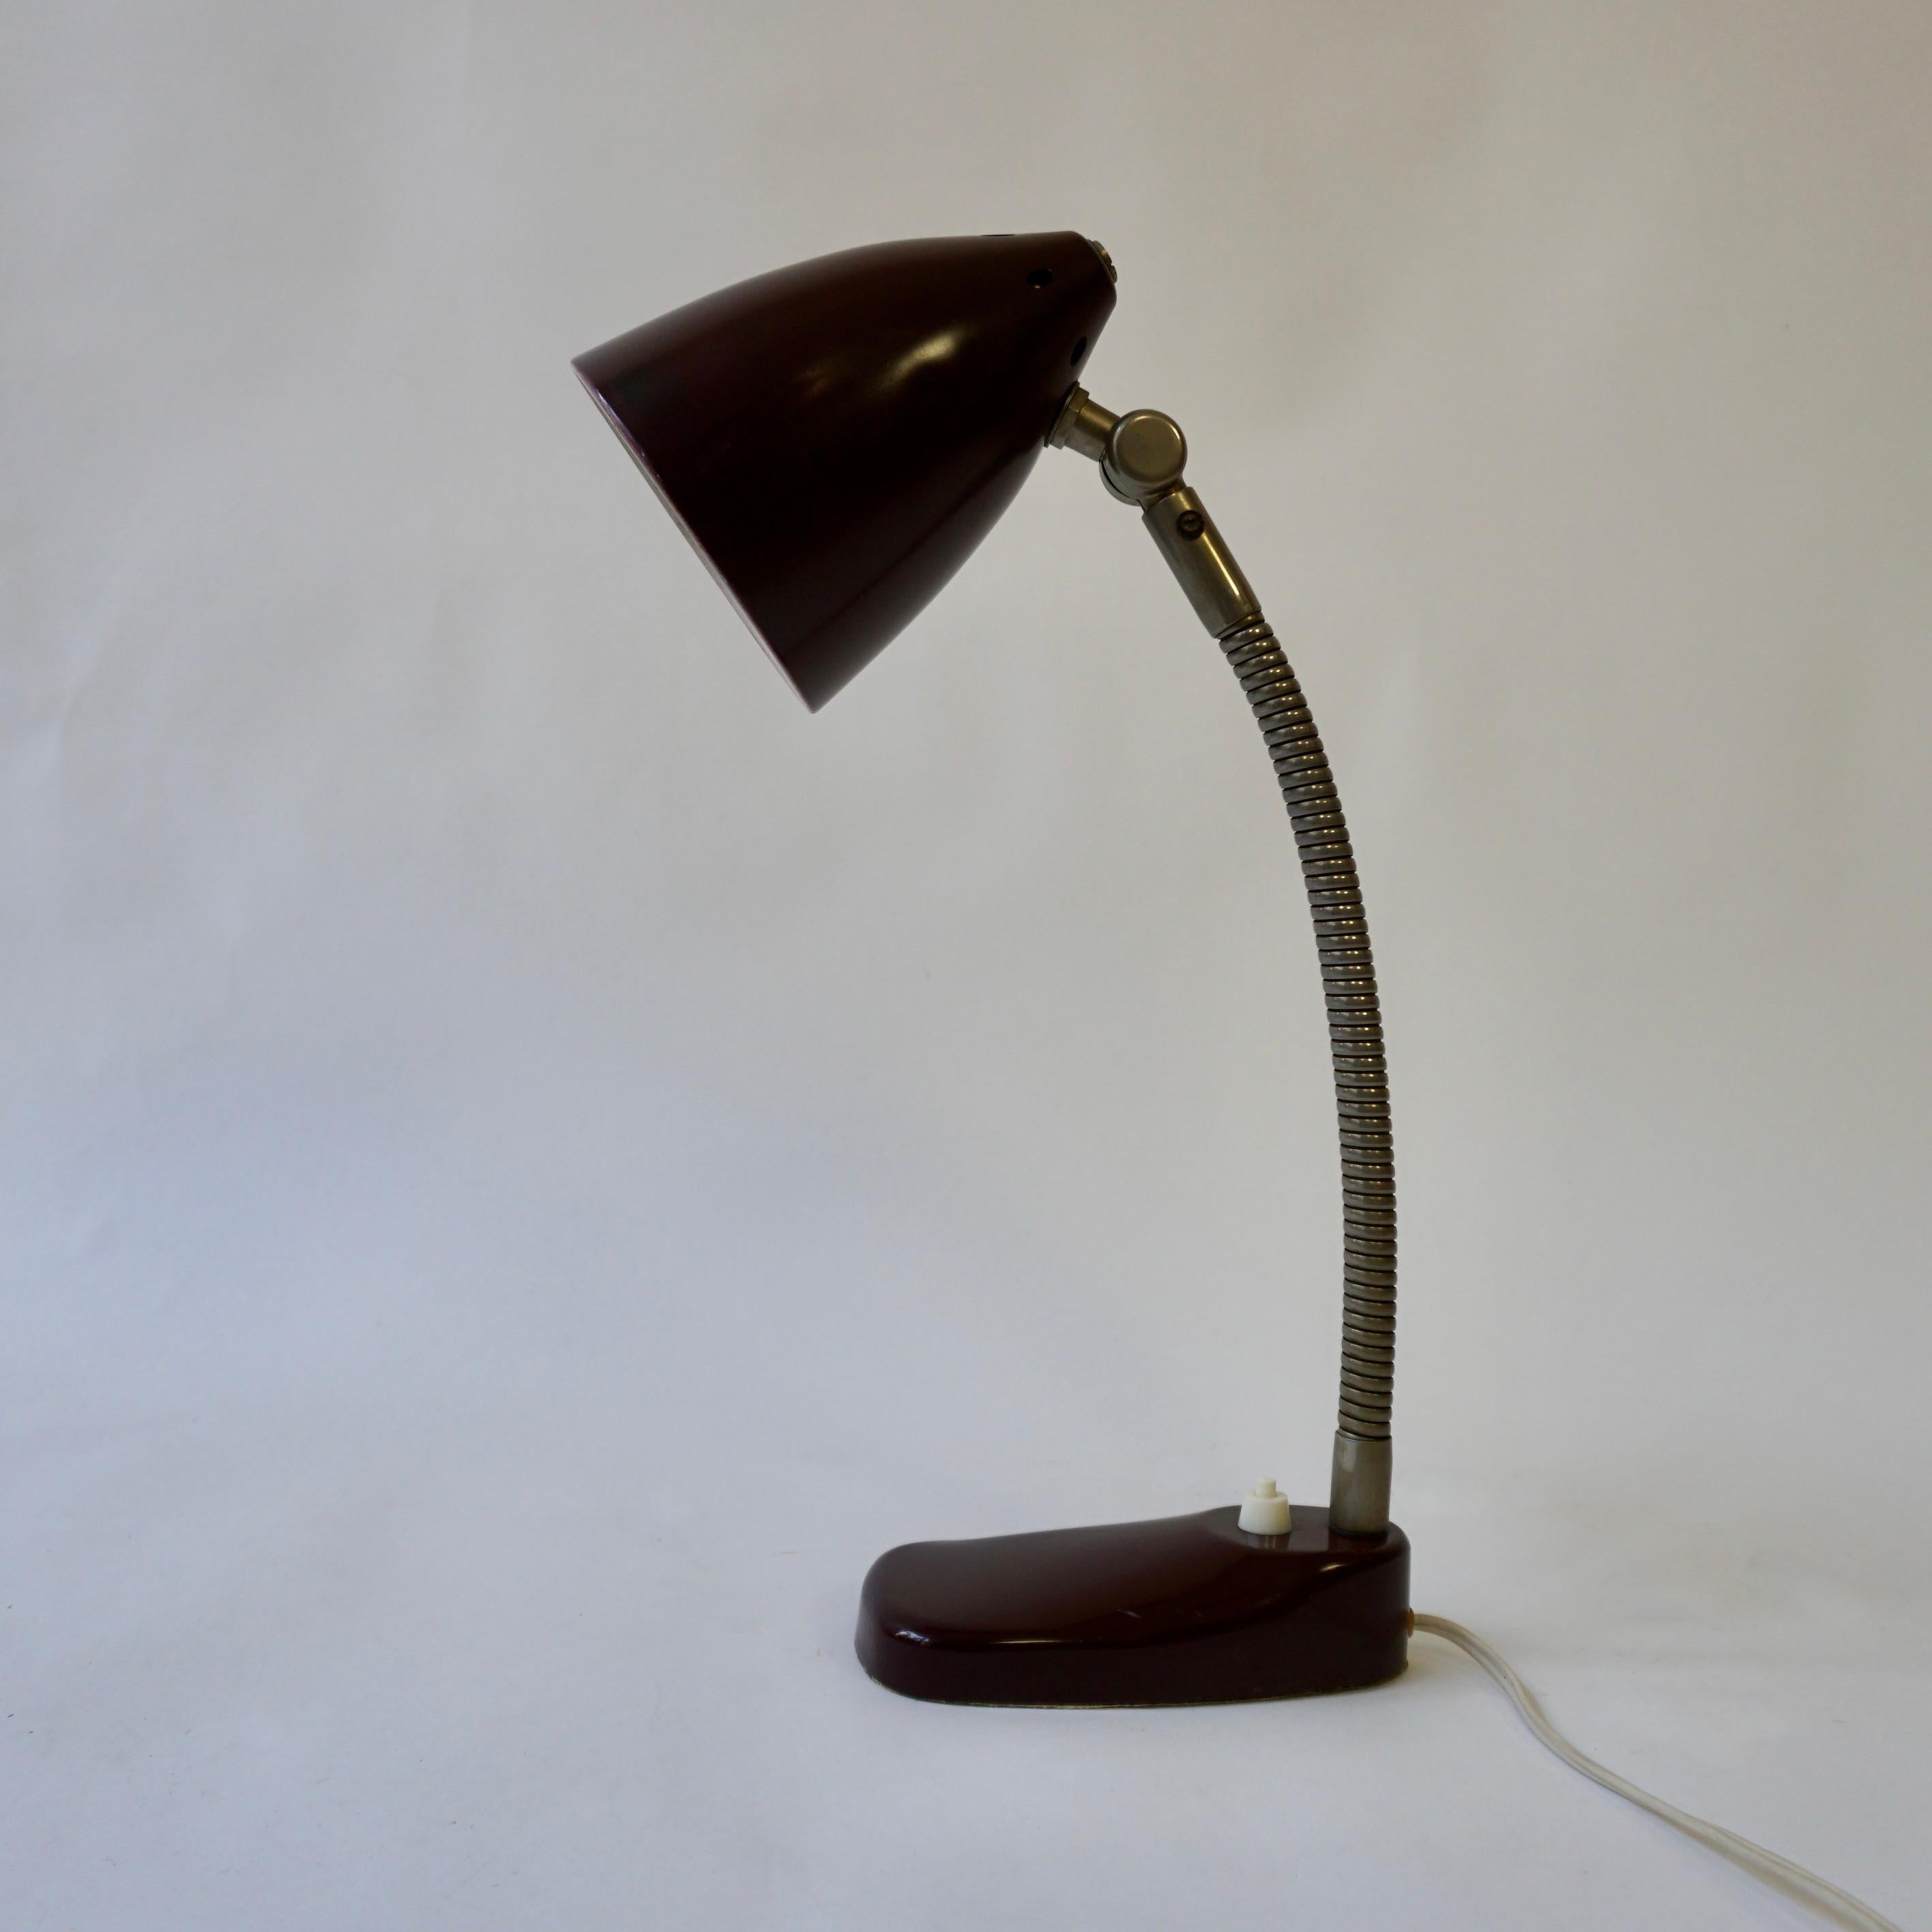 1940's Art Deco Adjustable Desk lamp or Reading Lamp For Sale 2